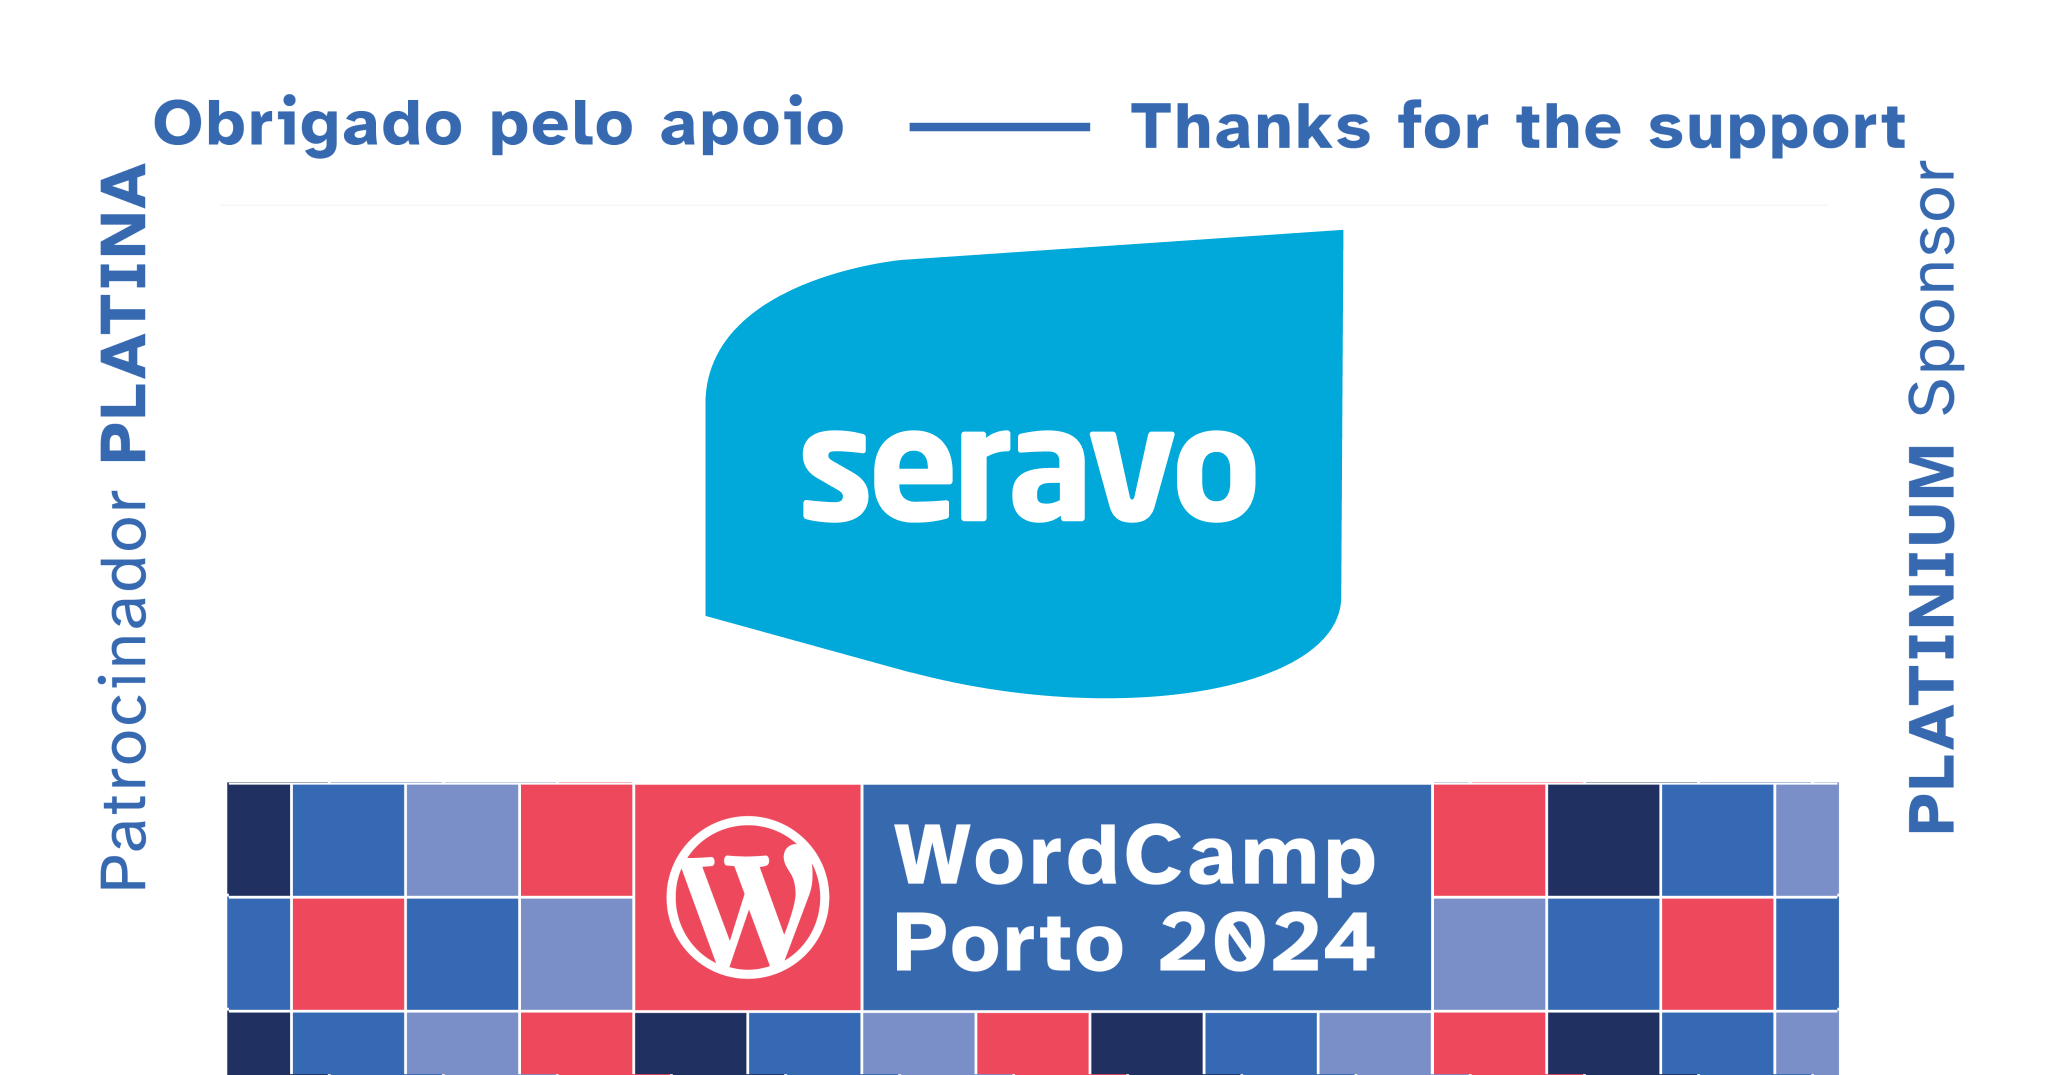 Thank you Seravo